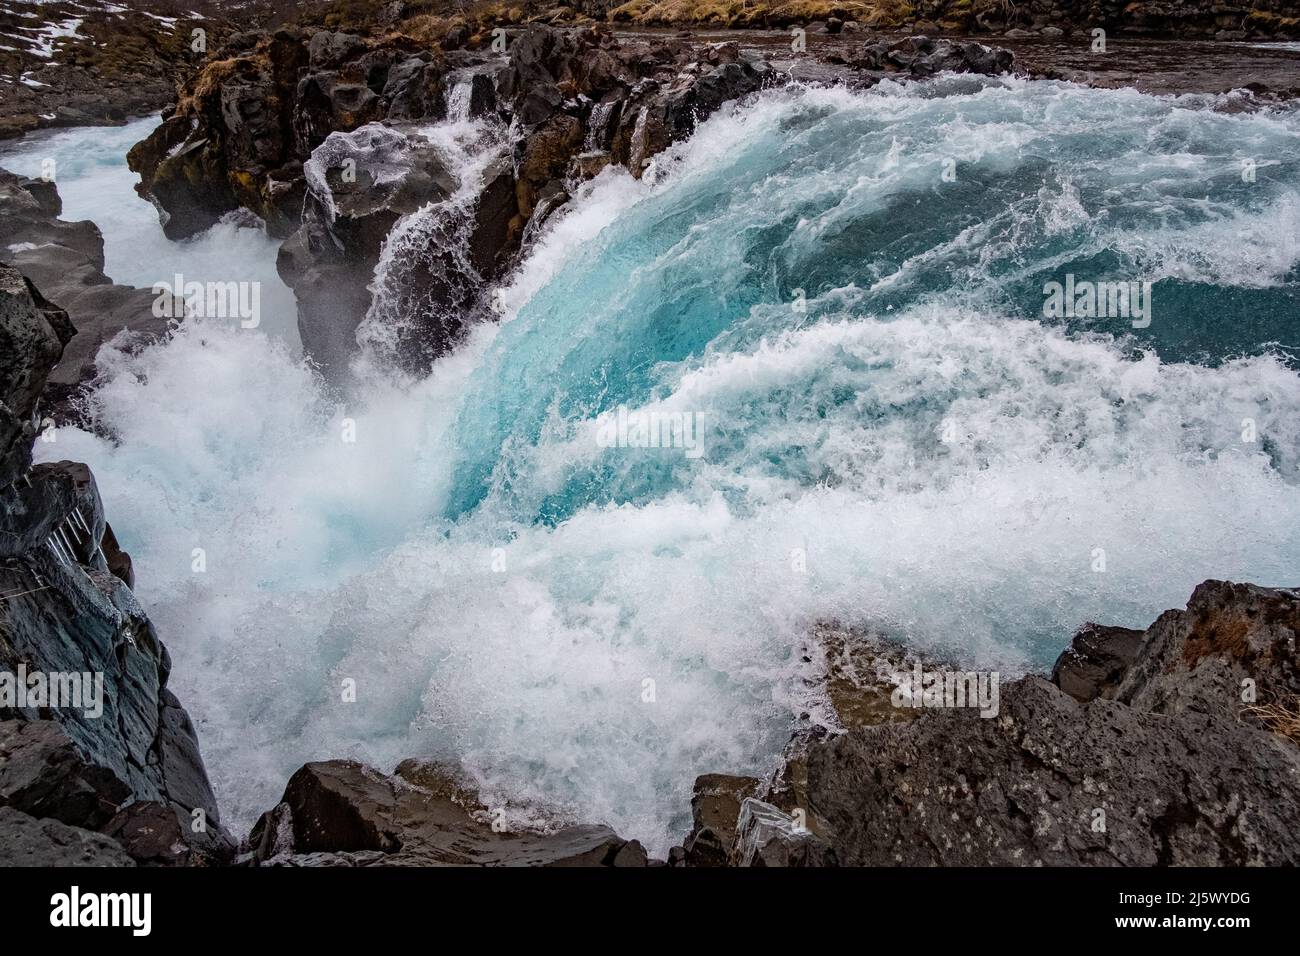 Wasserfall Hlauptungufoss im Golden Circle, Isola - una cascata blu chiamata 'Hlauptungufoss ' nel sud dell'Islanda. Foto Stock